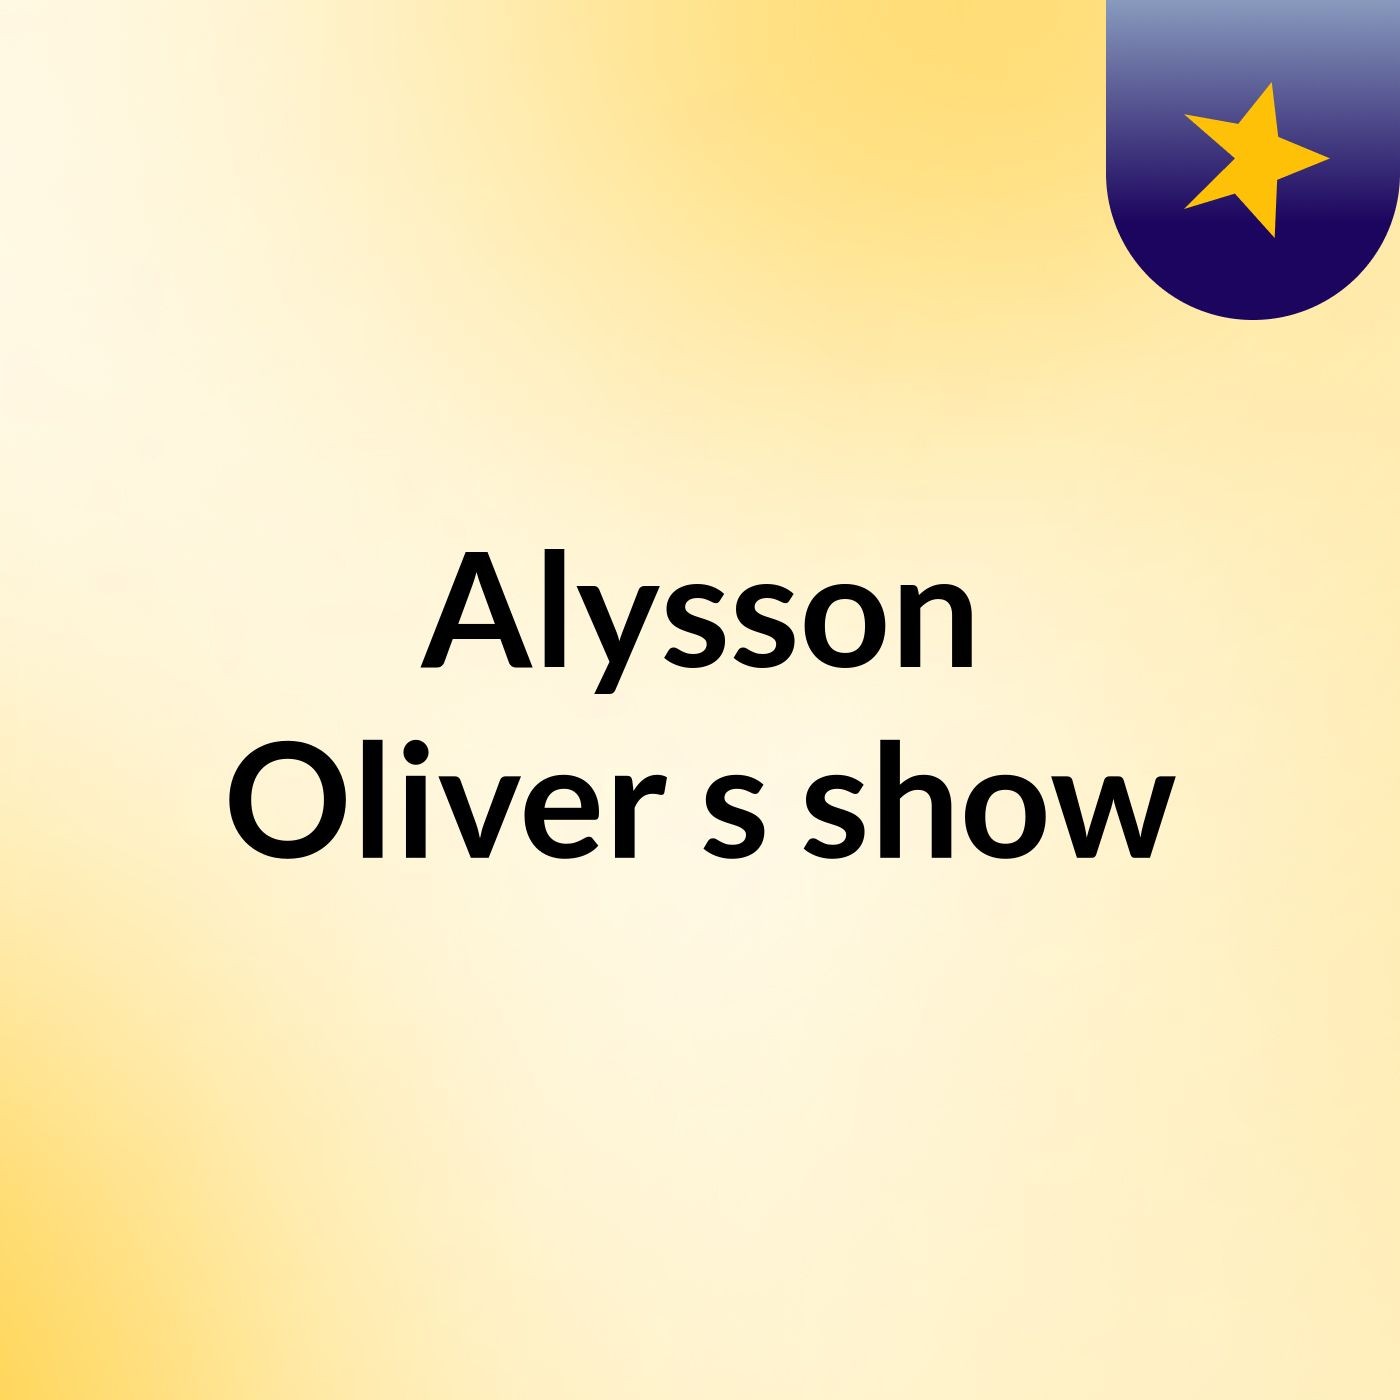 Alysson Oliver's show